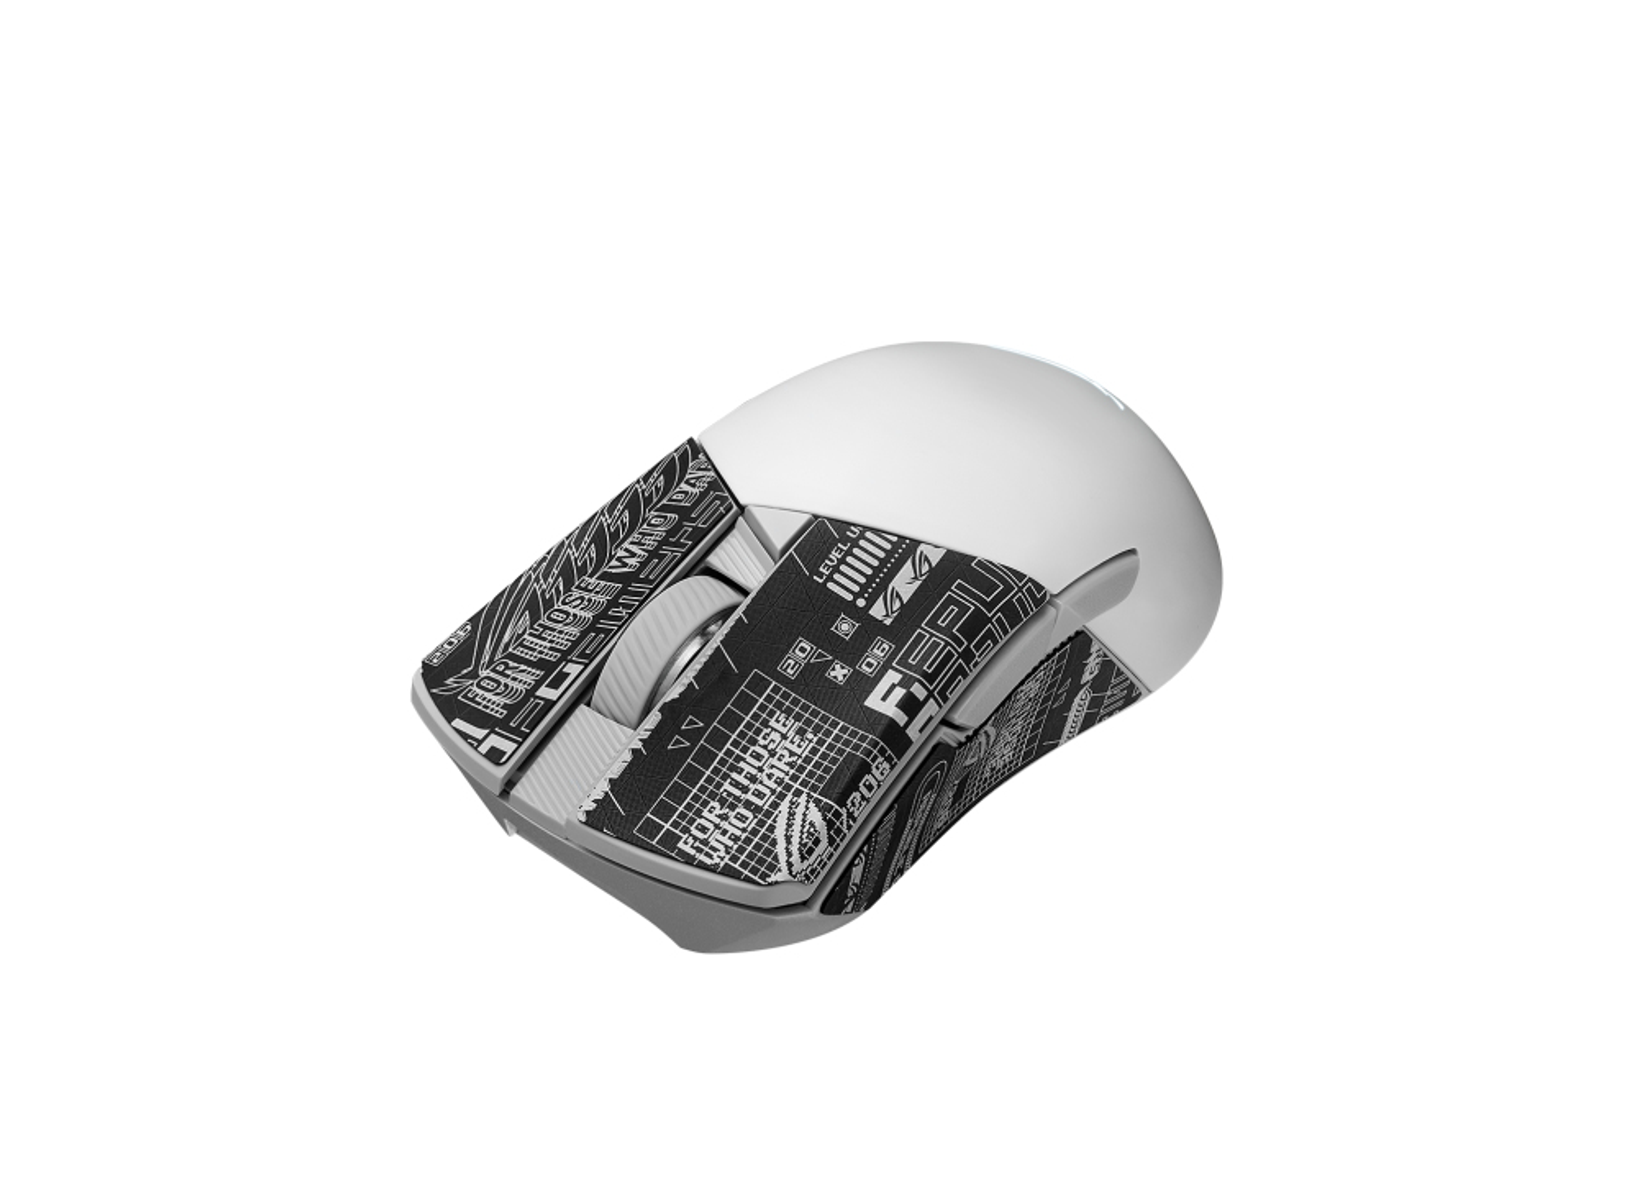 Gladius Wireless Aimpoint Maus, Weiß White ASUS III Gaming